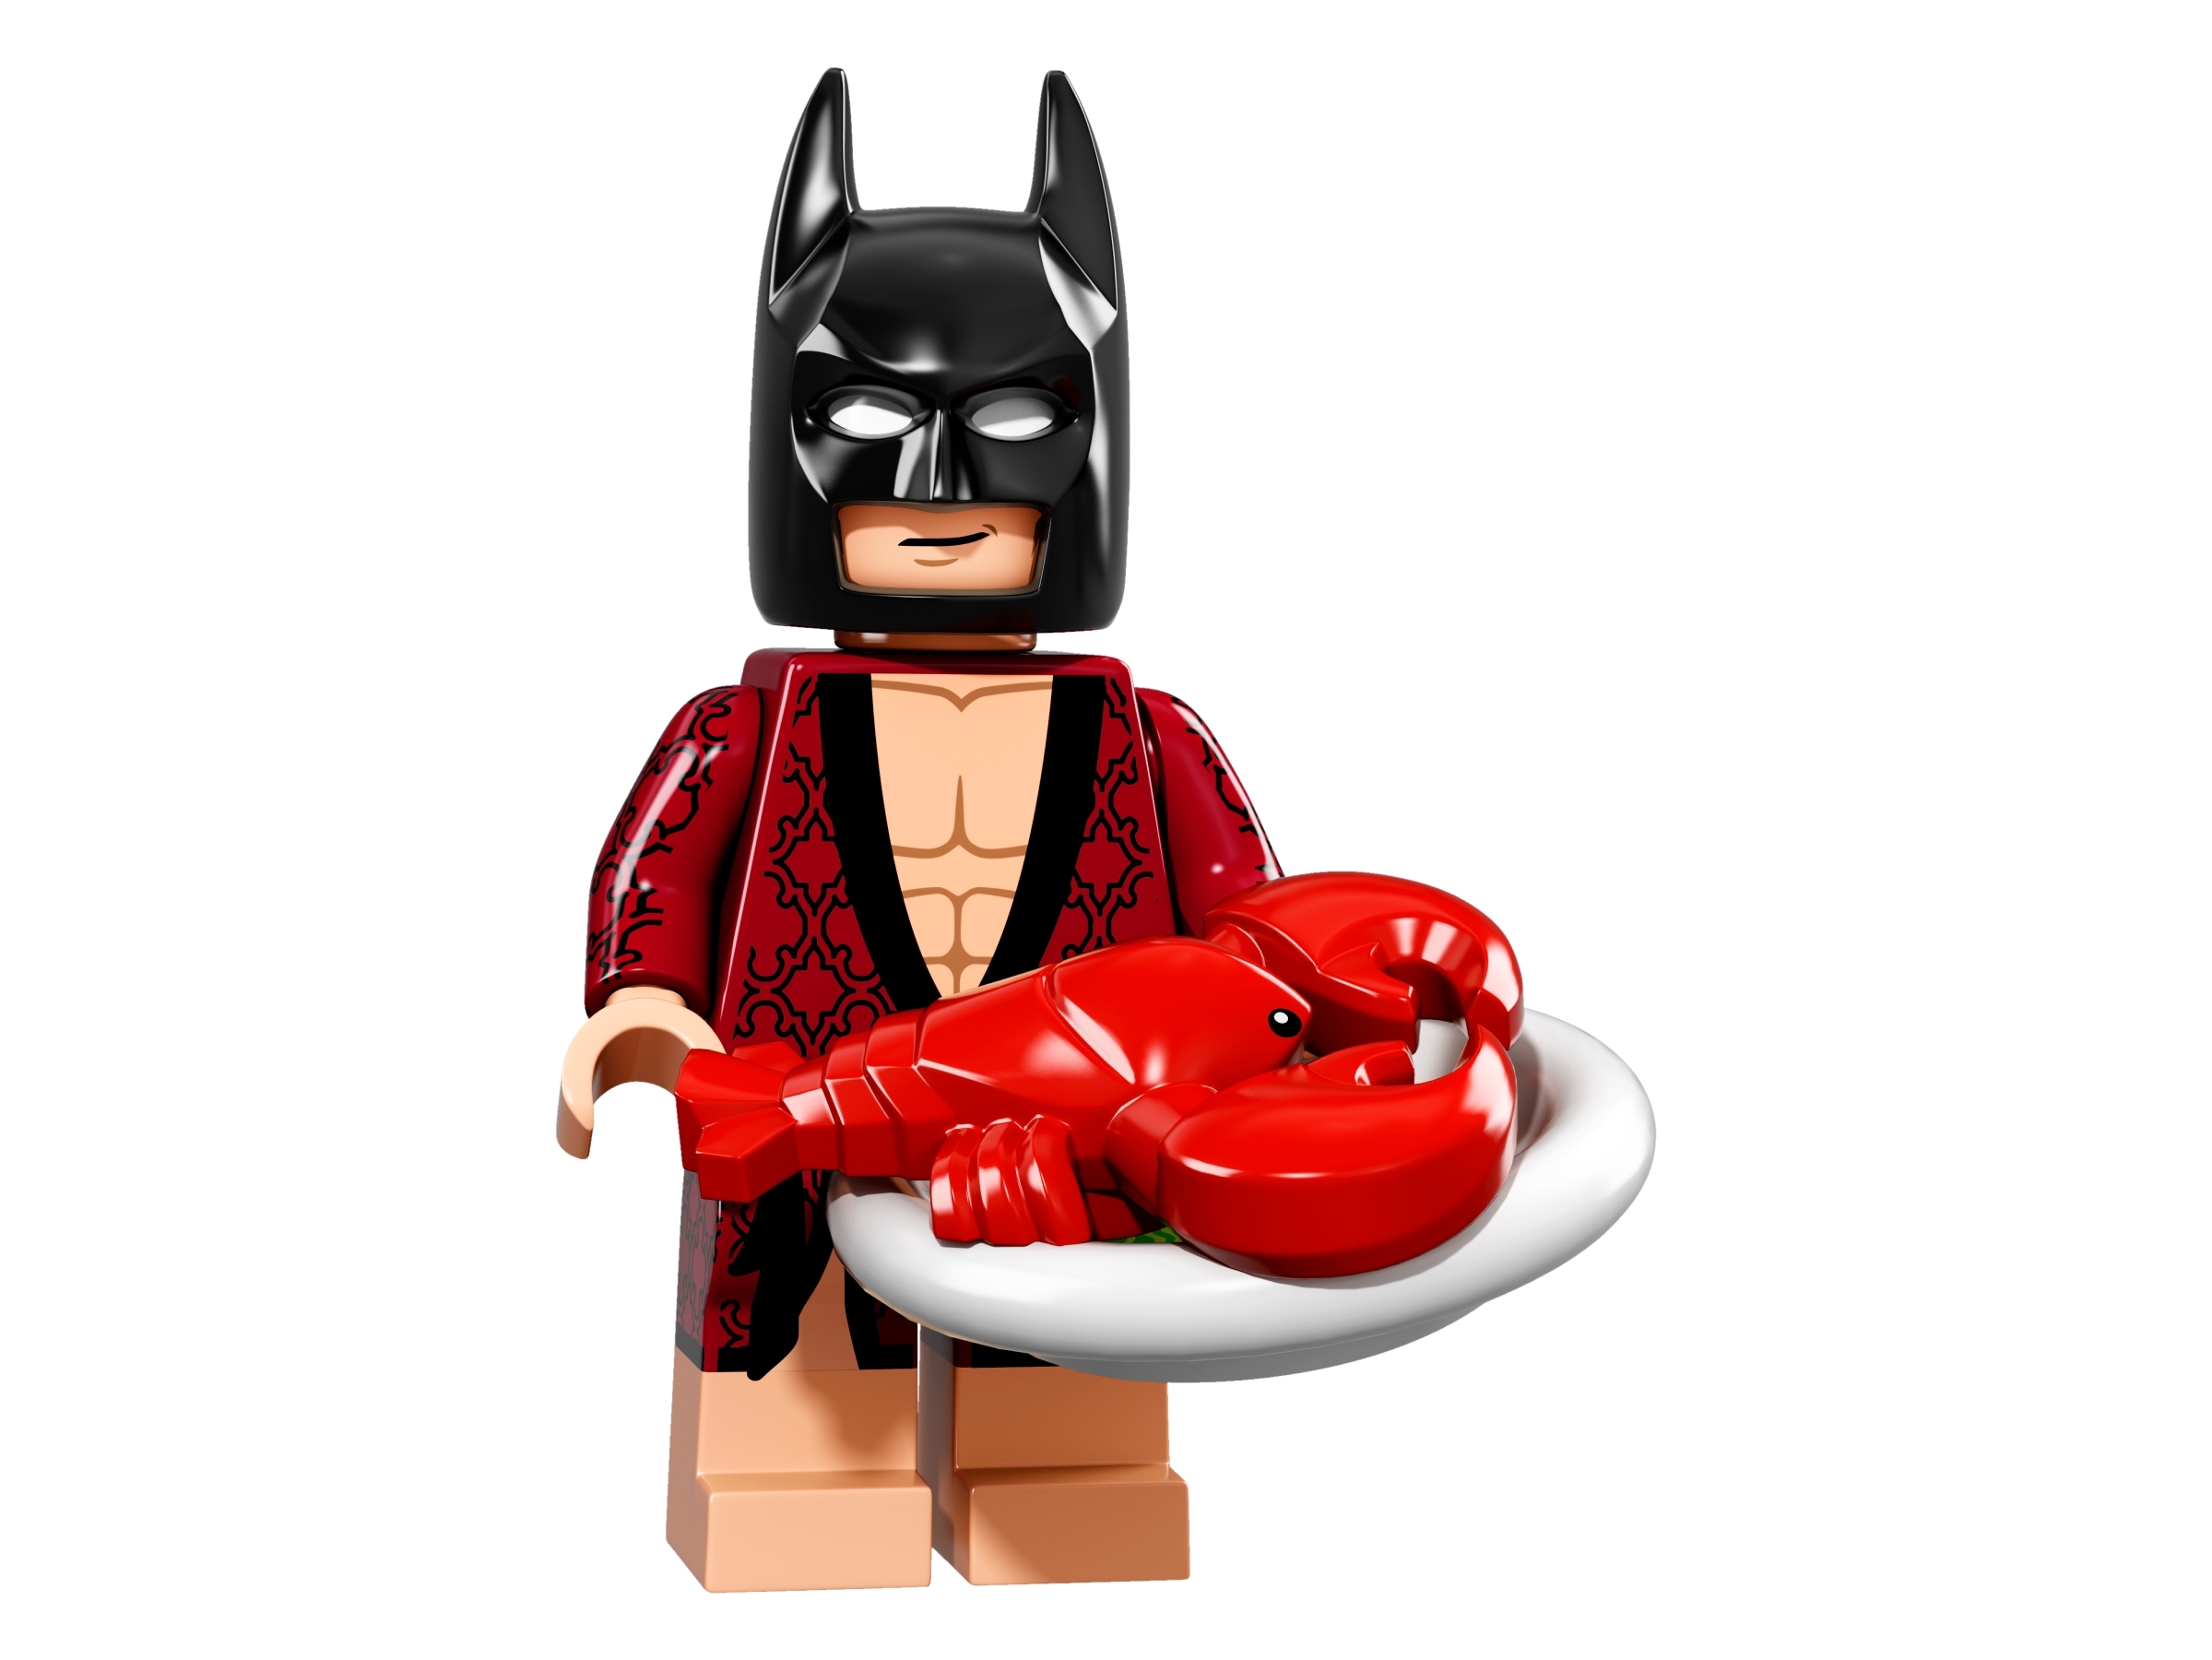 lego batman movie minifigures series release date